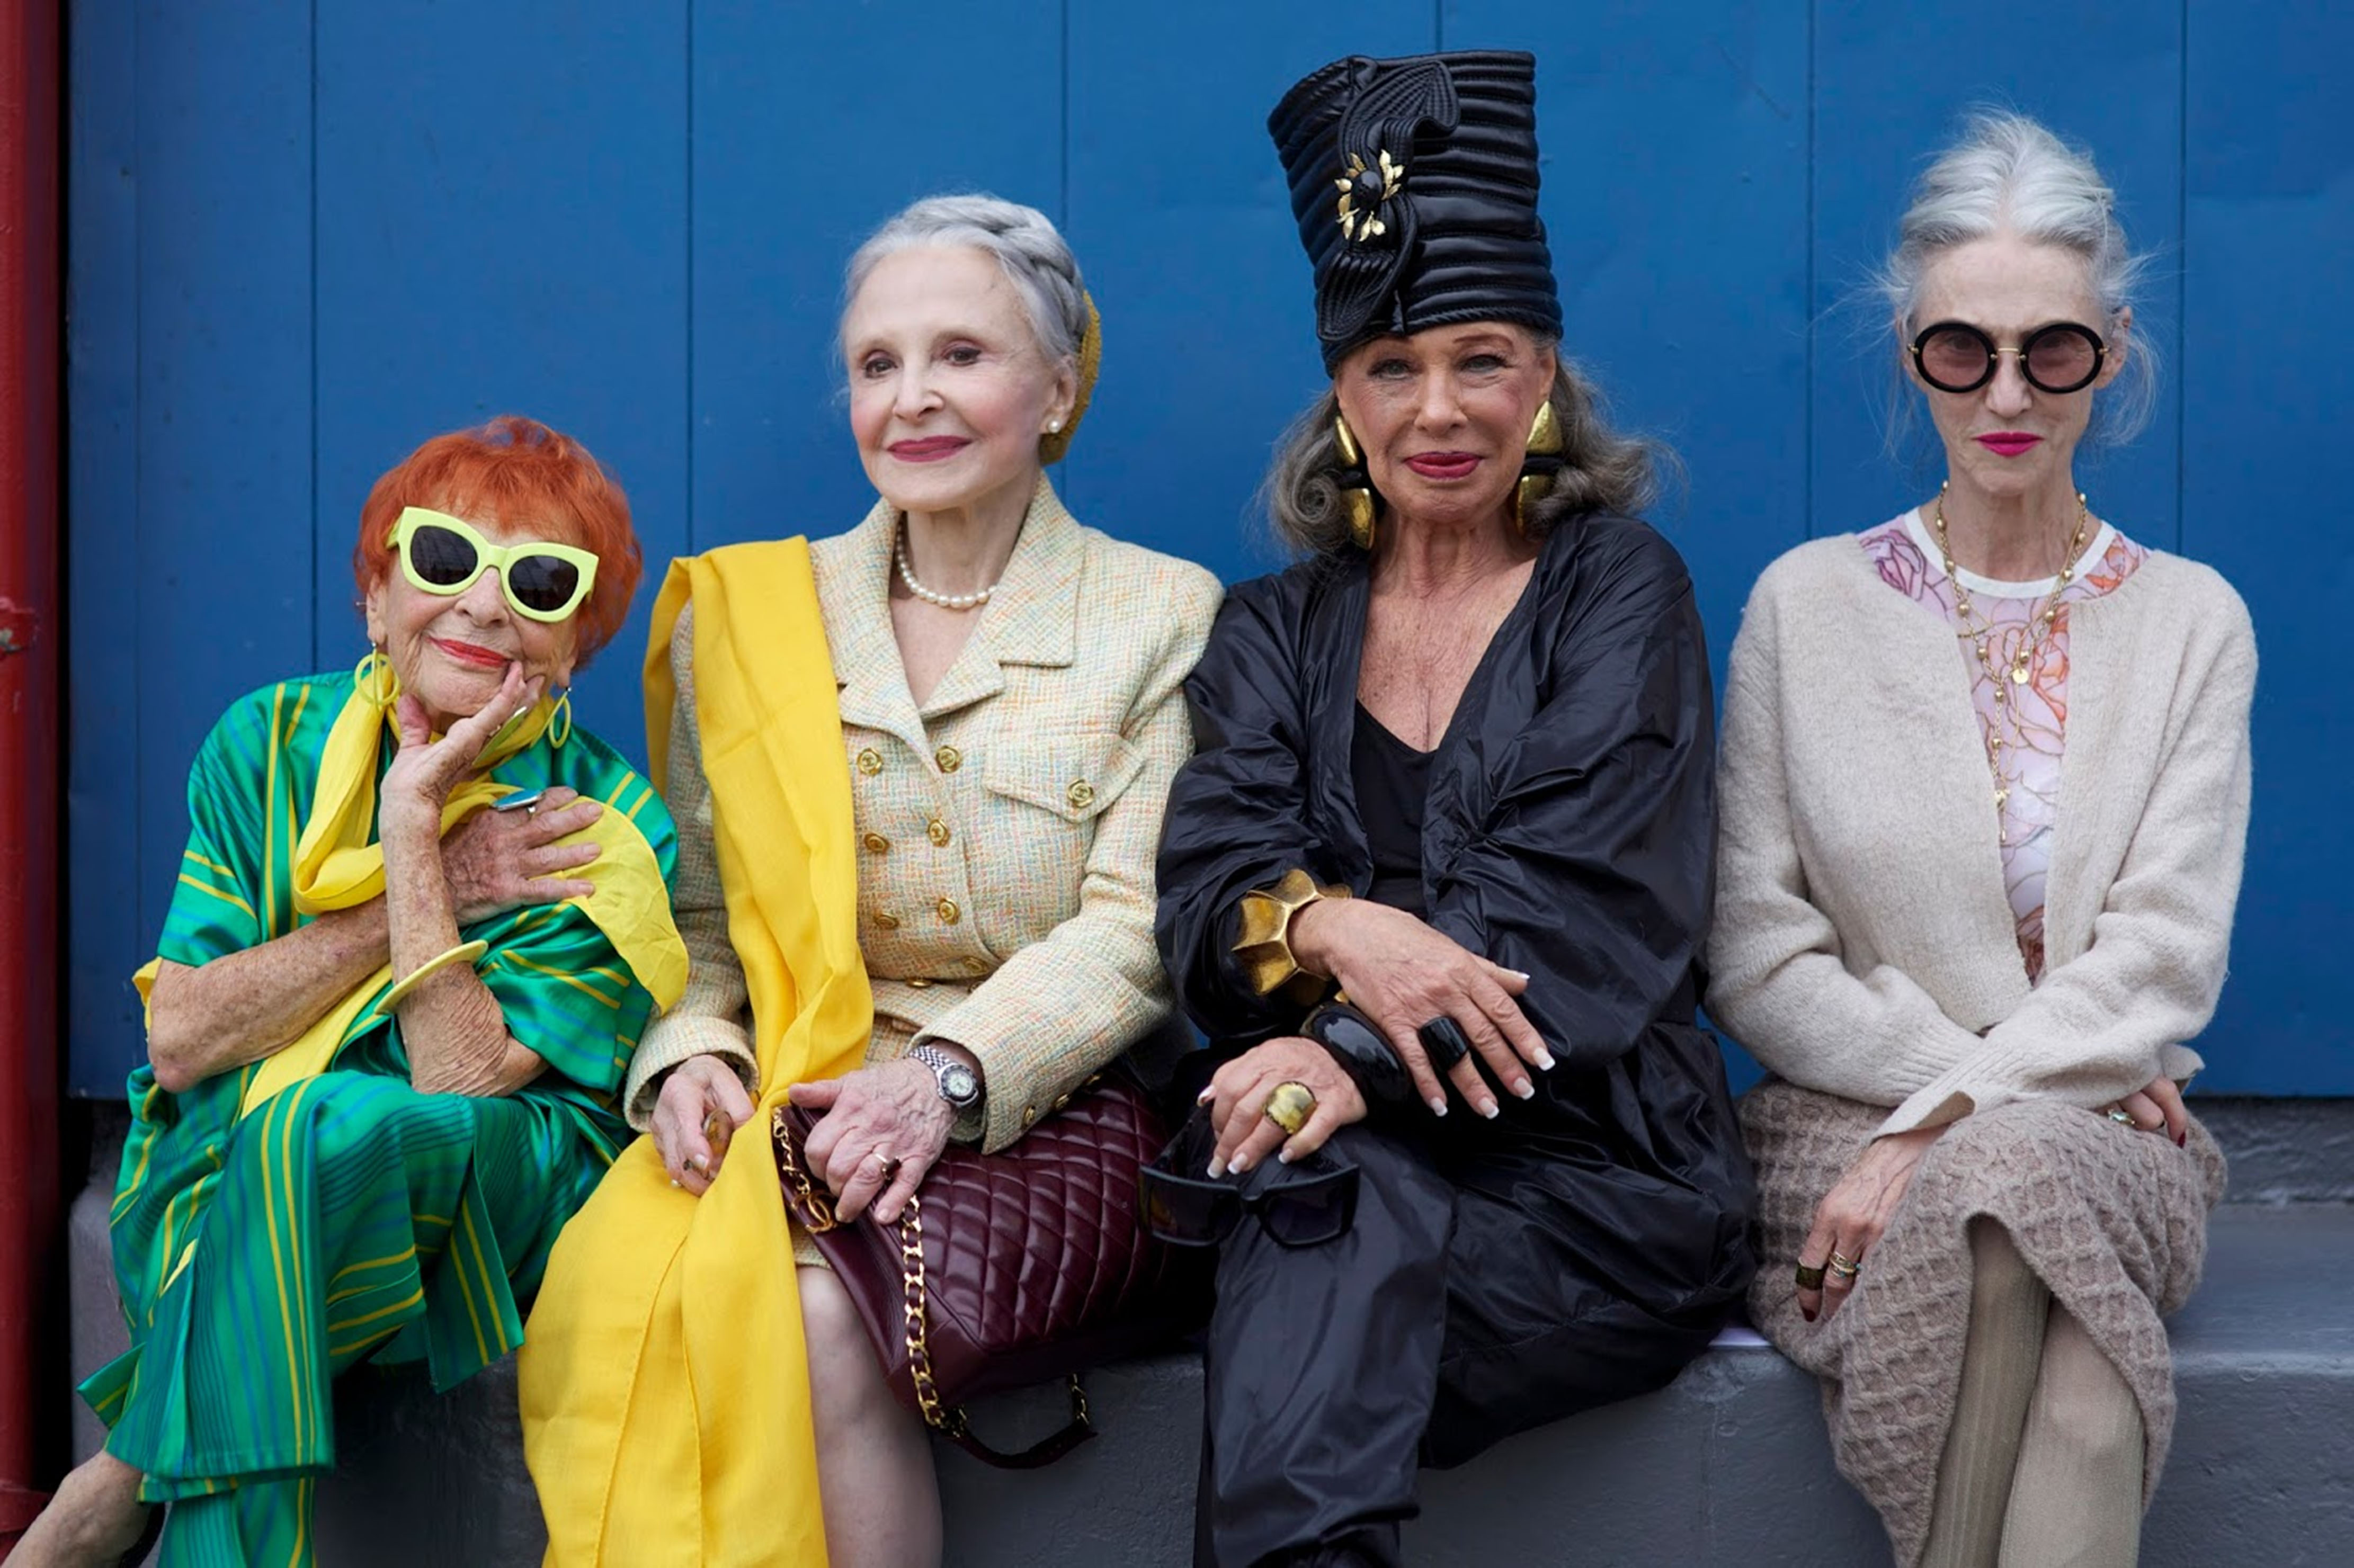 Включи 3 бабушки. Ари сет Коэн (ari Seth Cohen). Модная бабушка. Четыре модные старушки. Элегантные модные бабушки.